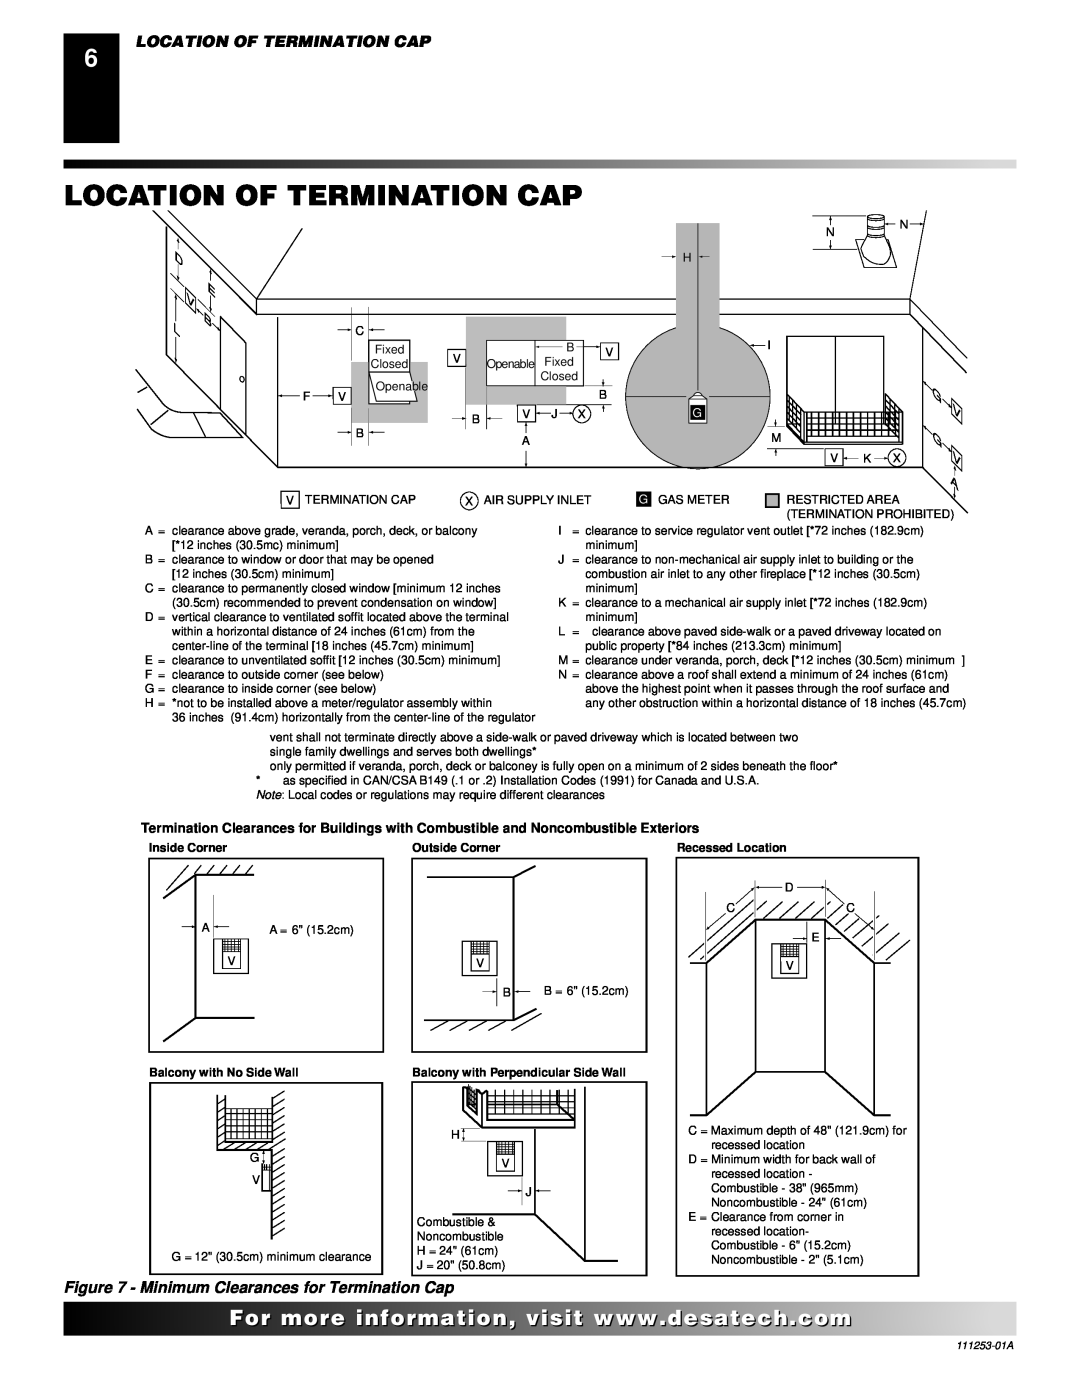 Desa (V)V36ENA(1) Location Of Termination Cap, D E B L, V G V A, Minimum Clearances for Termination Cap, Inside Corner 